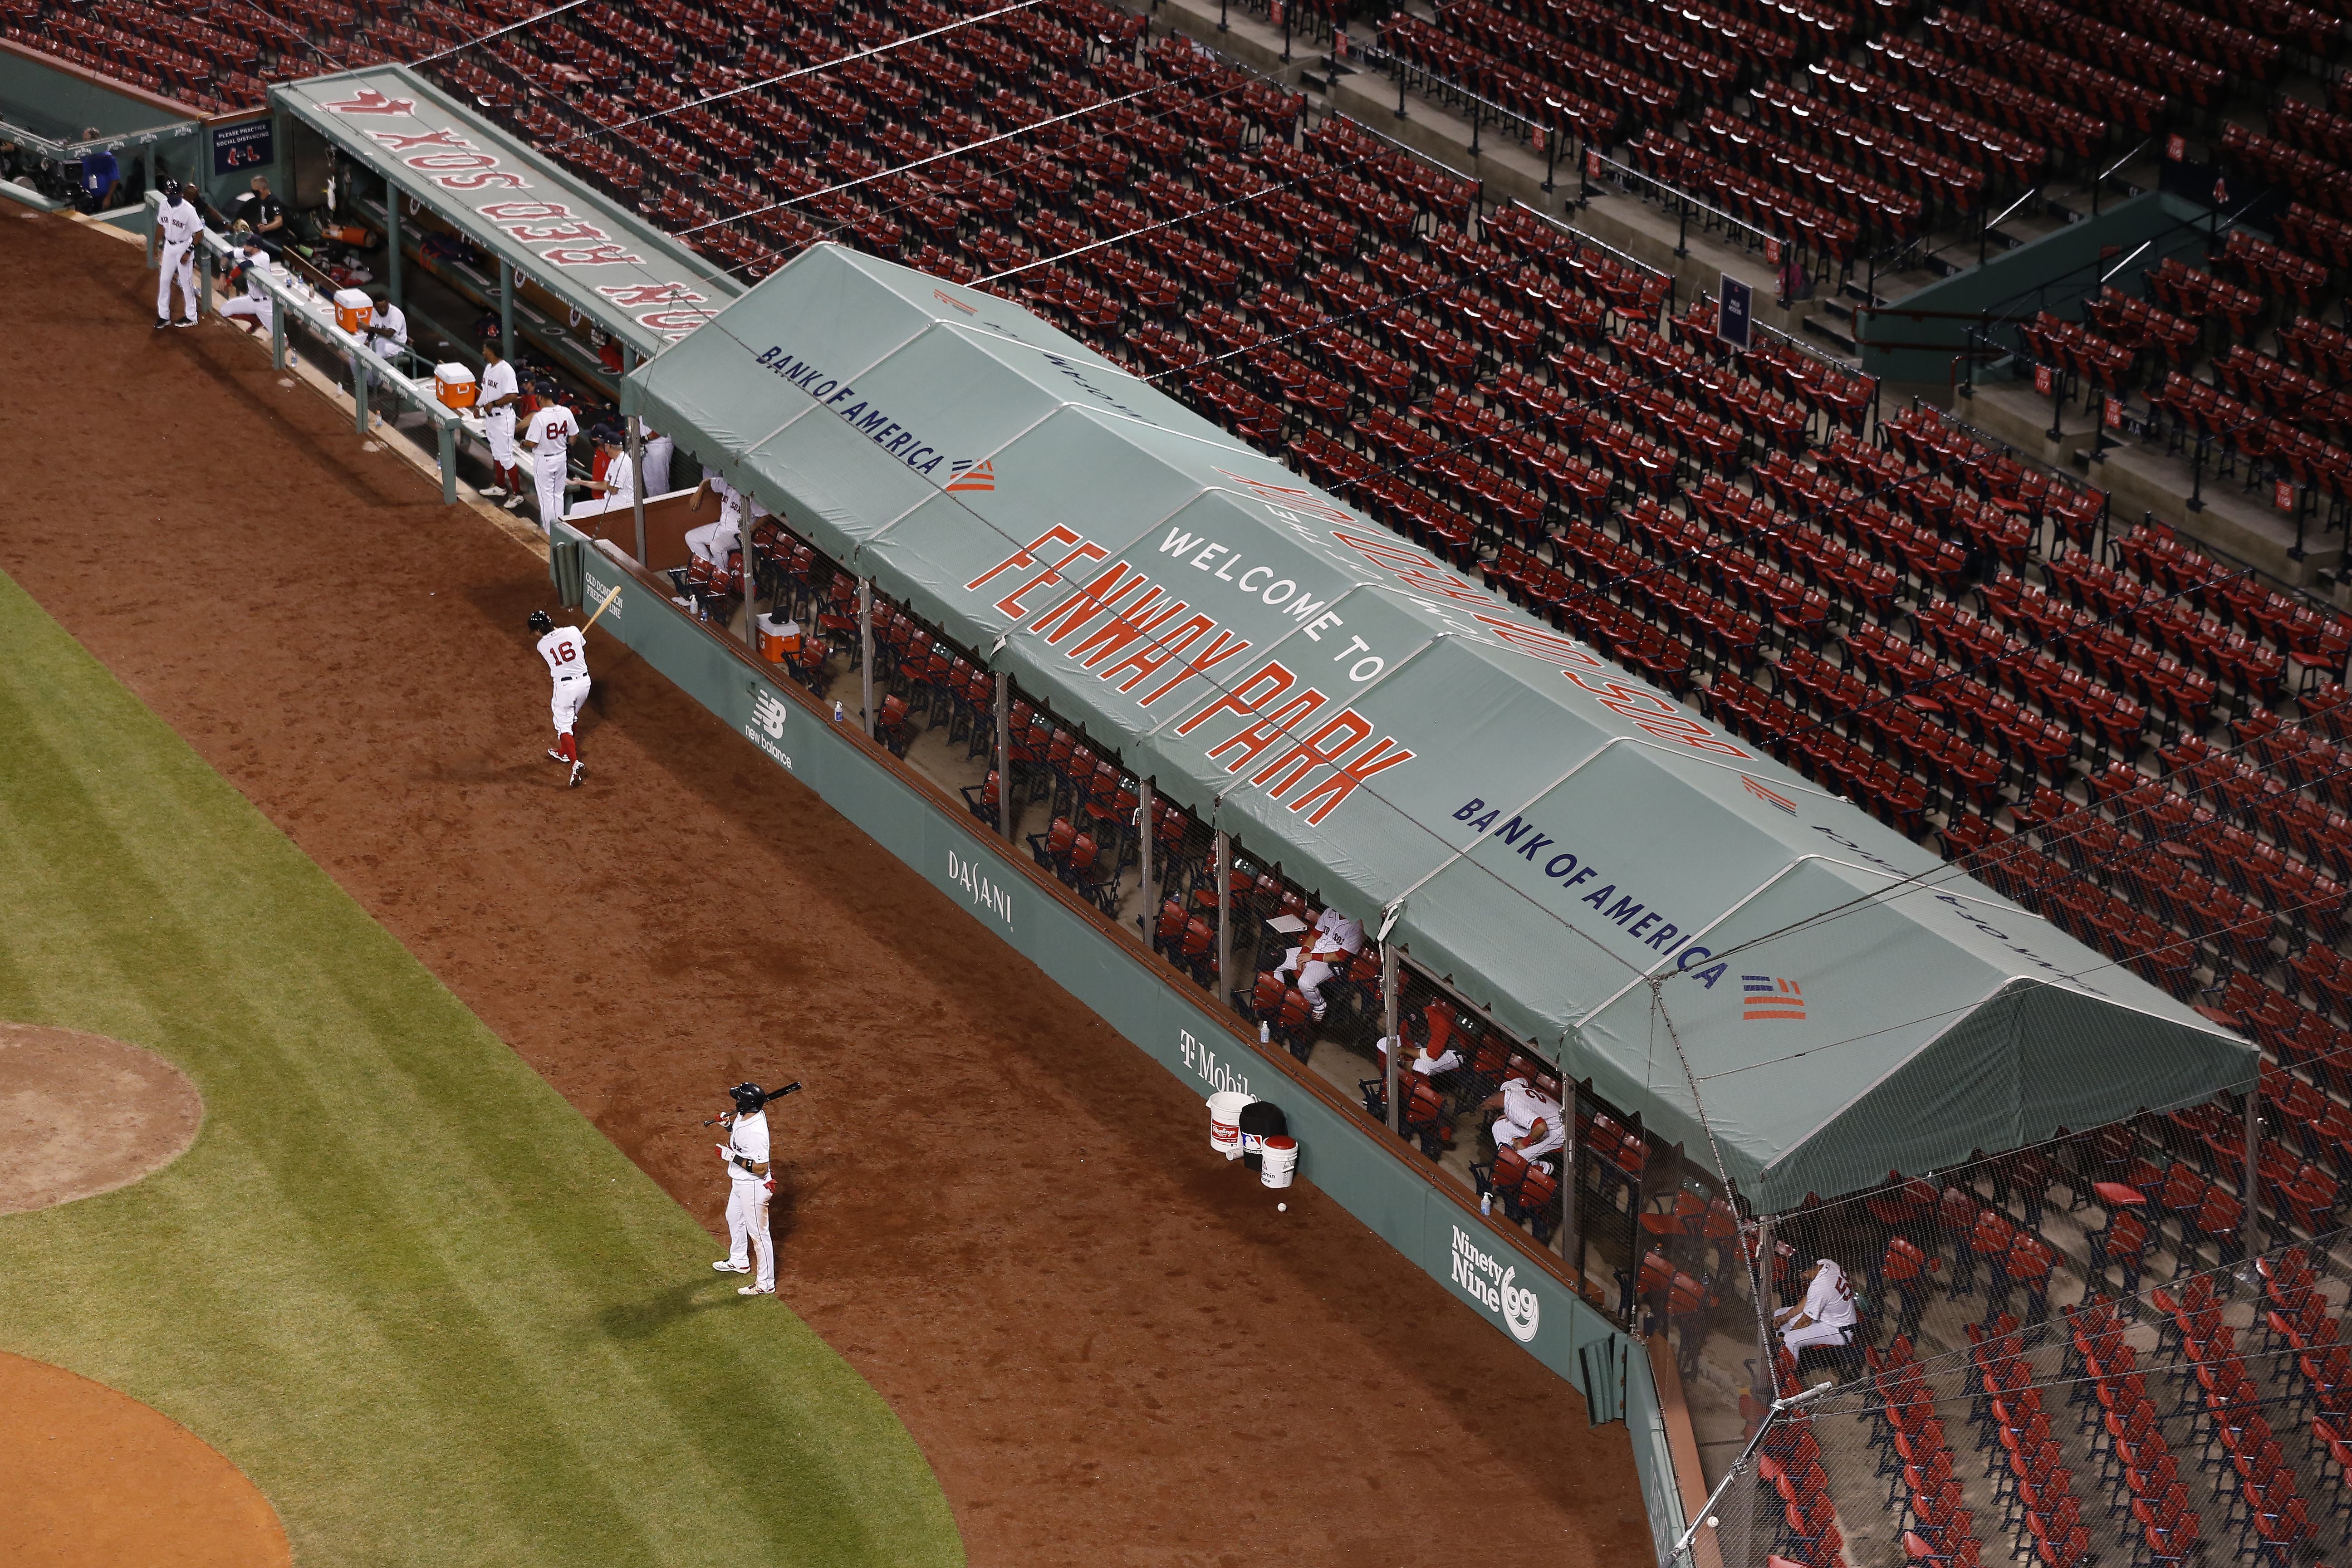 Fenway Park - Boston Red Sox (MLB) 